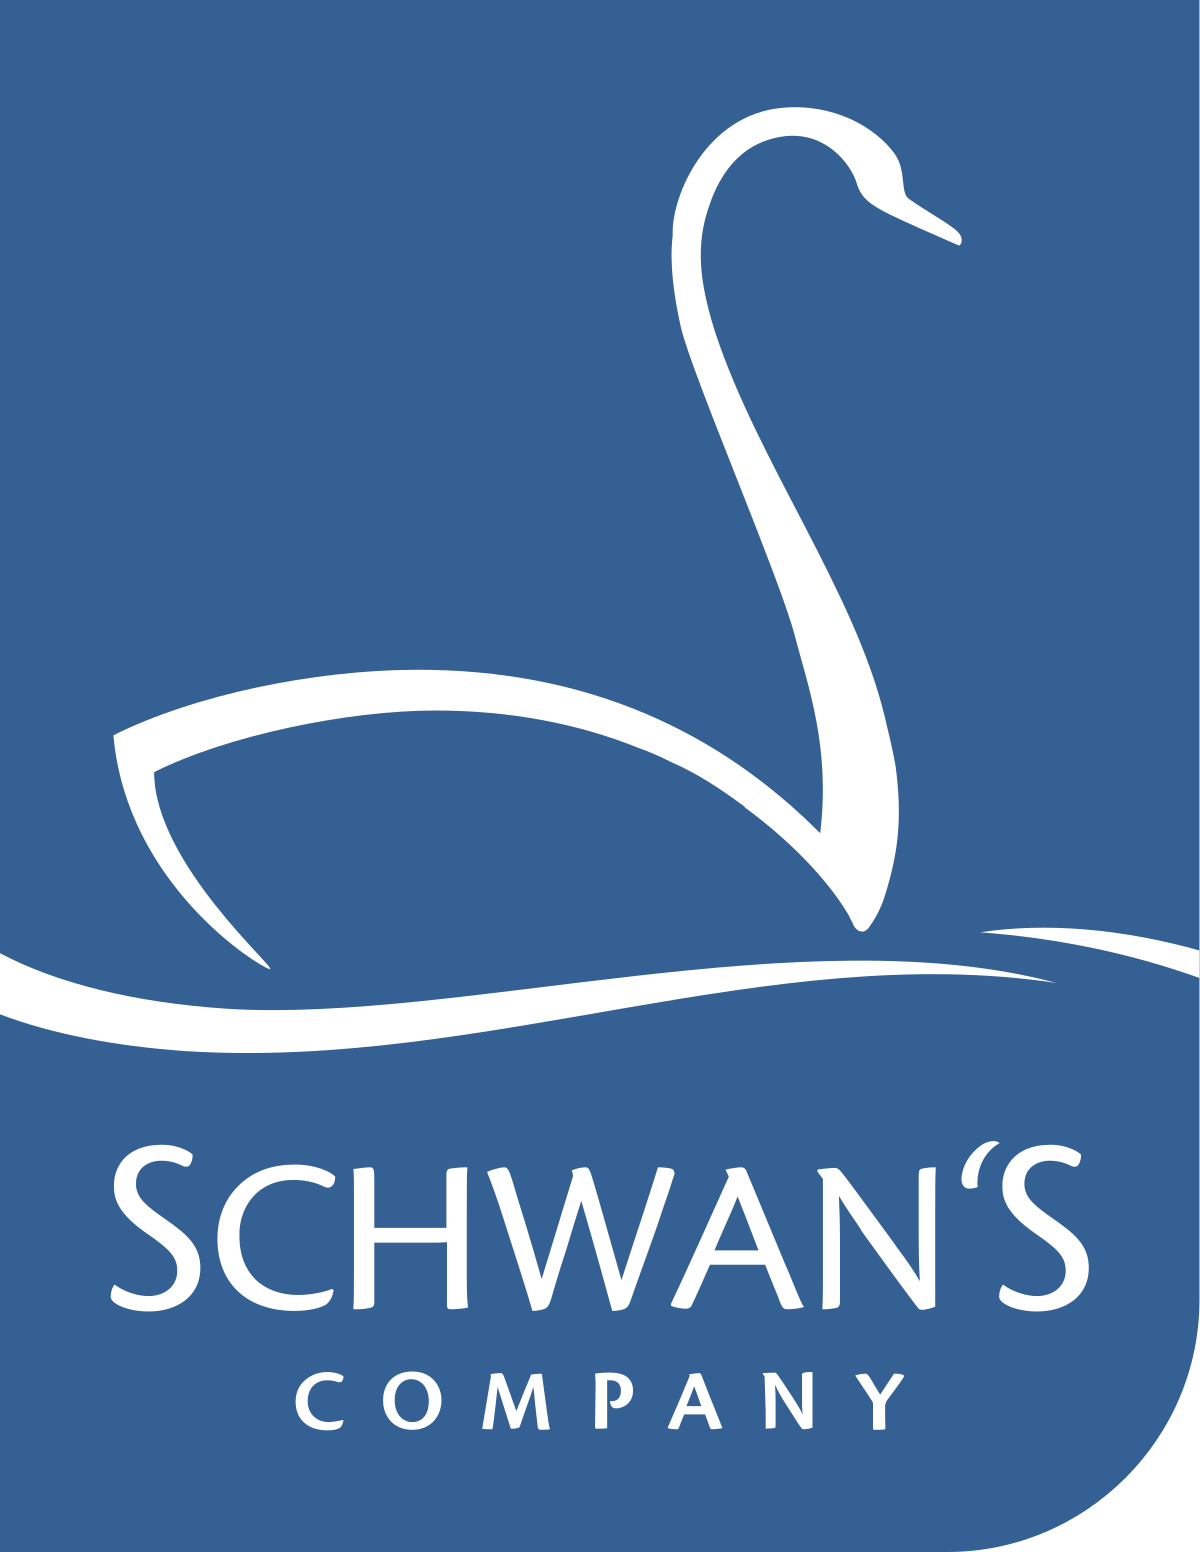 Swan Company Logo - Schwan's Company